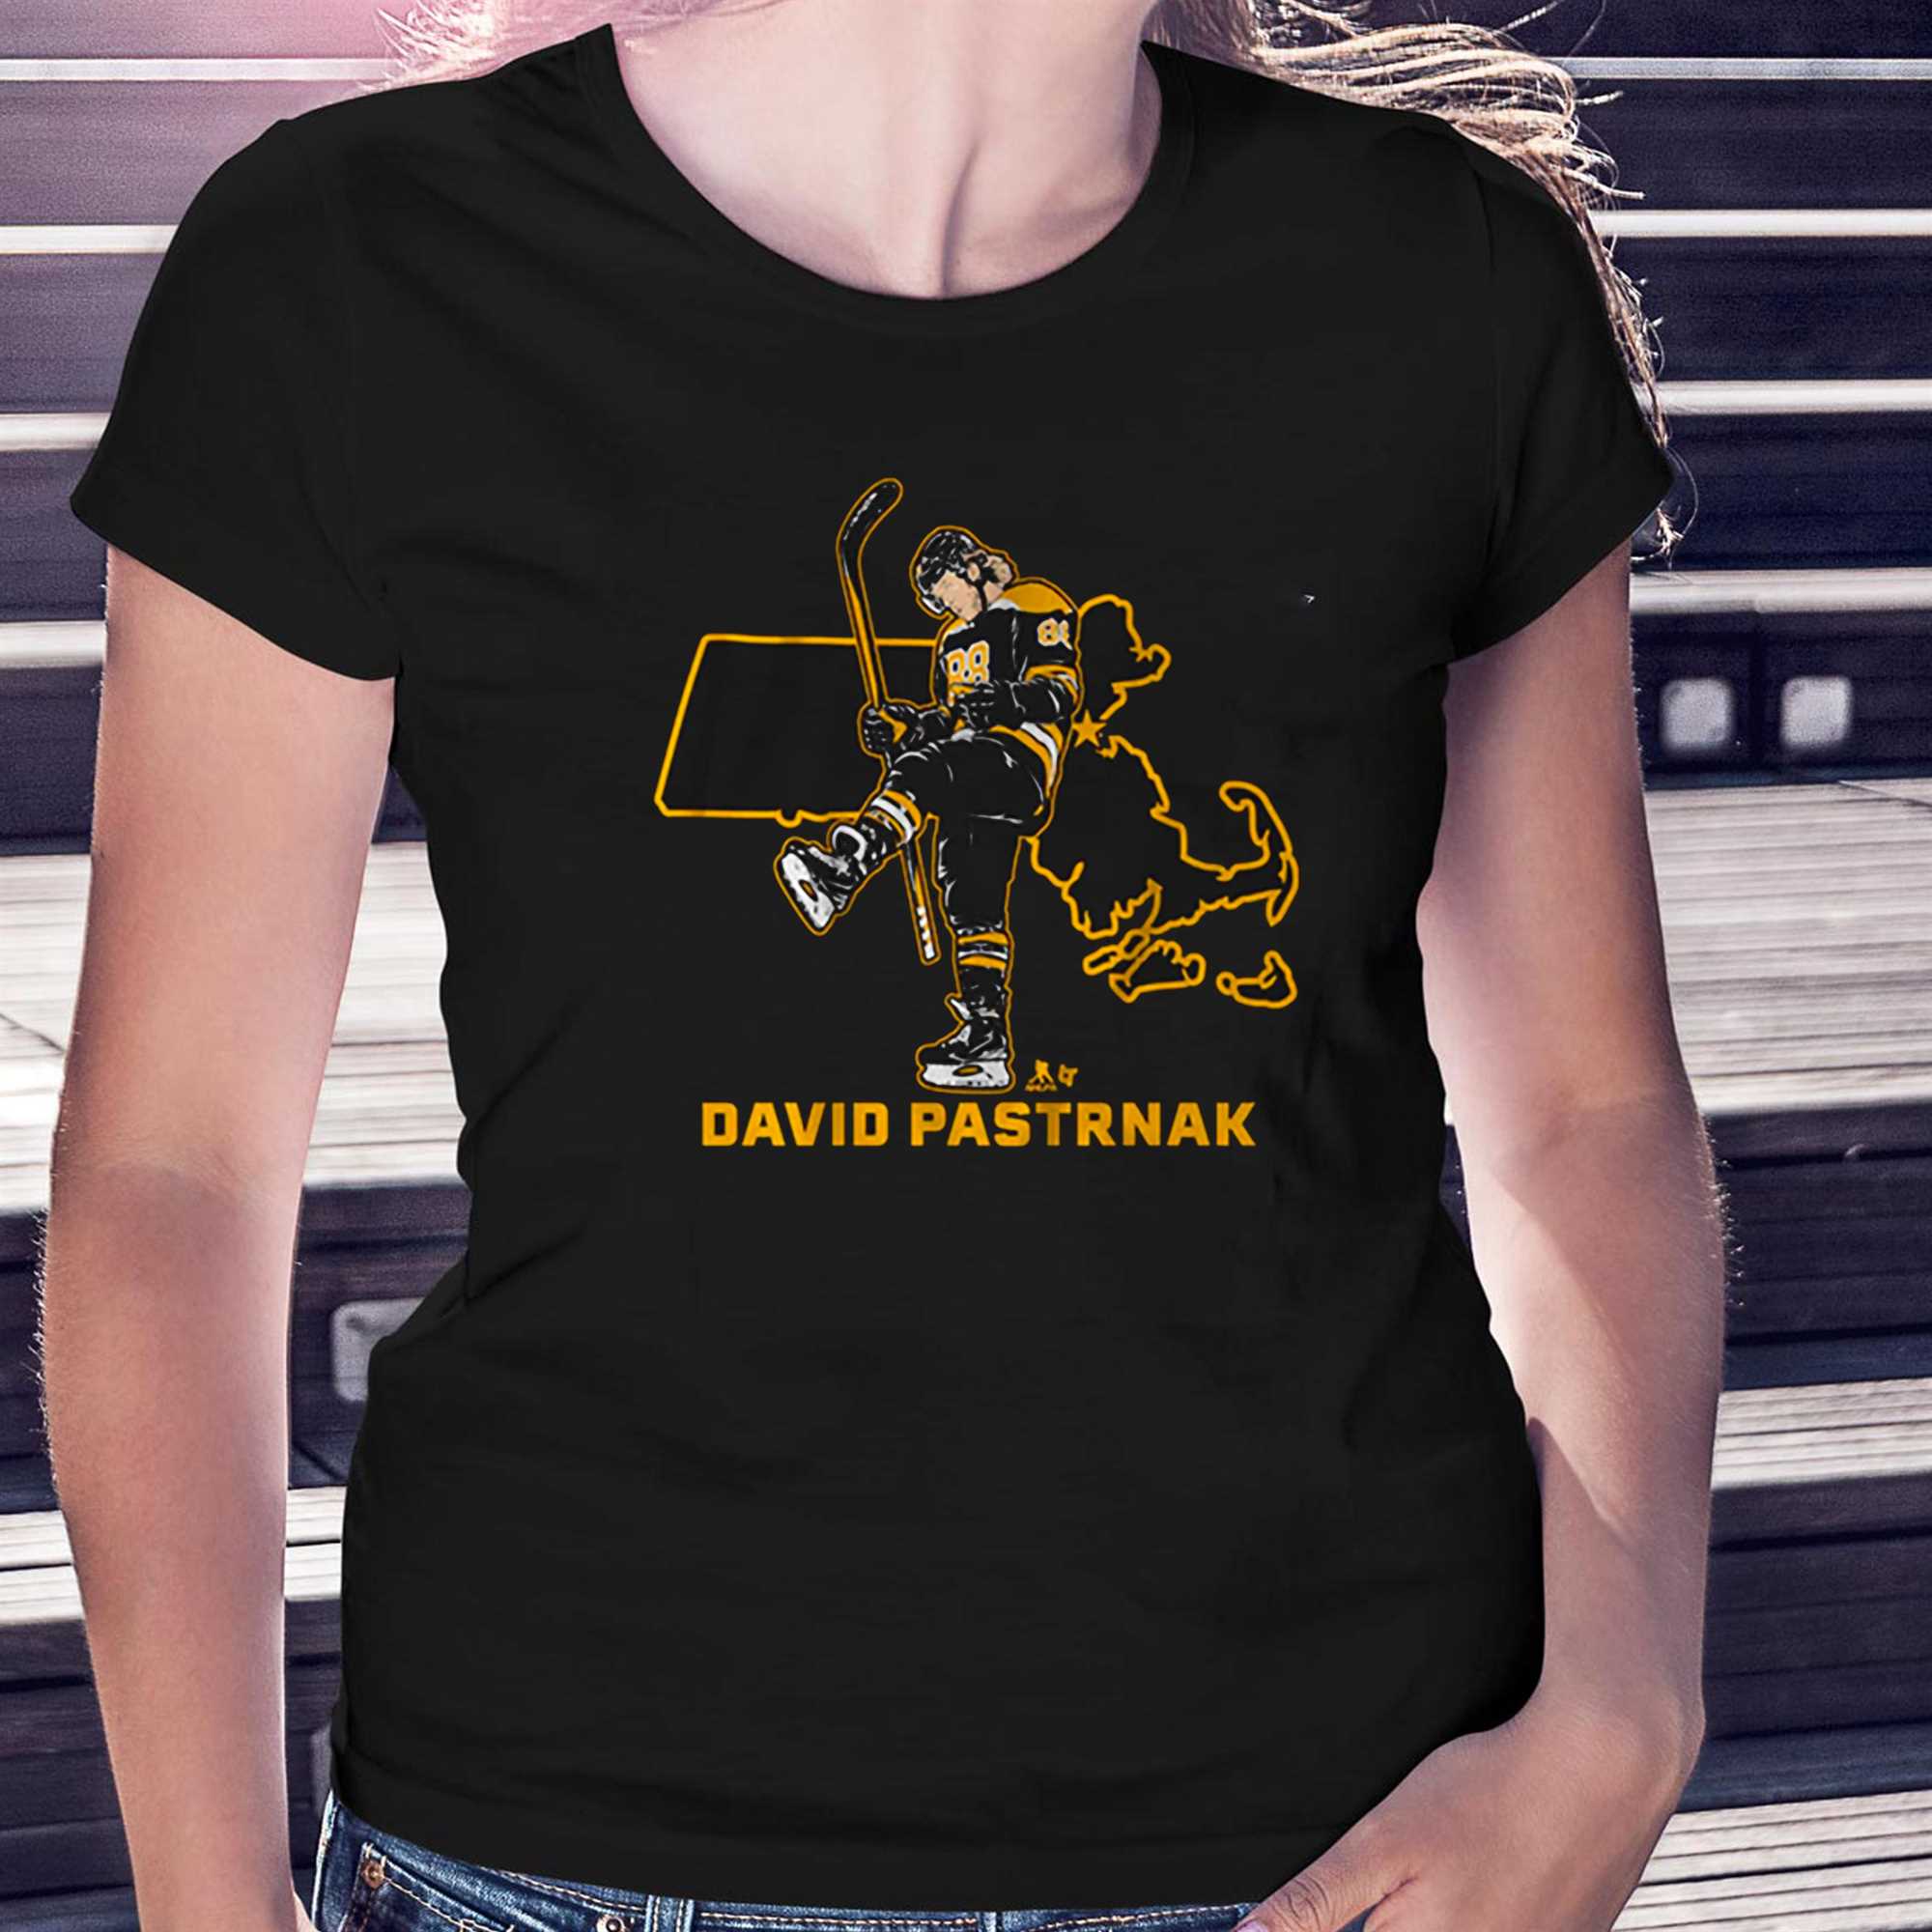 Is David Pastrnak Married? David Pastrnak Girlfriend Name